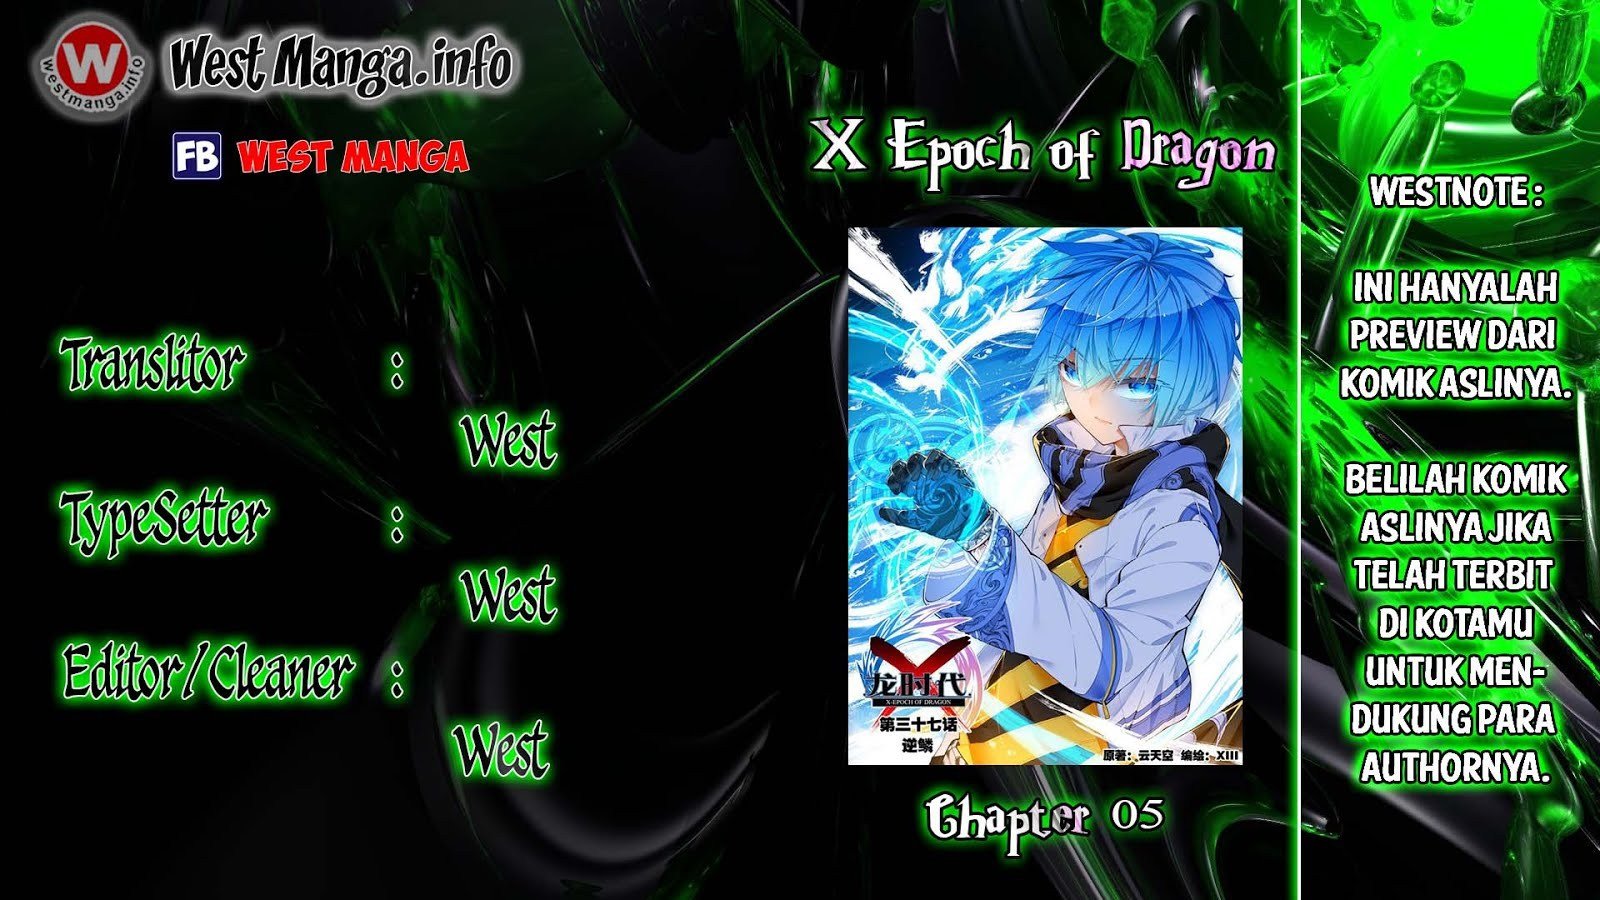 X Epoch of Dragon Chapter 05